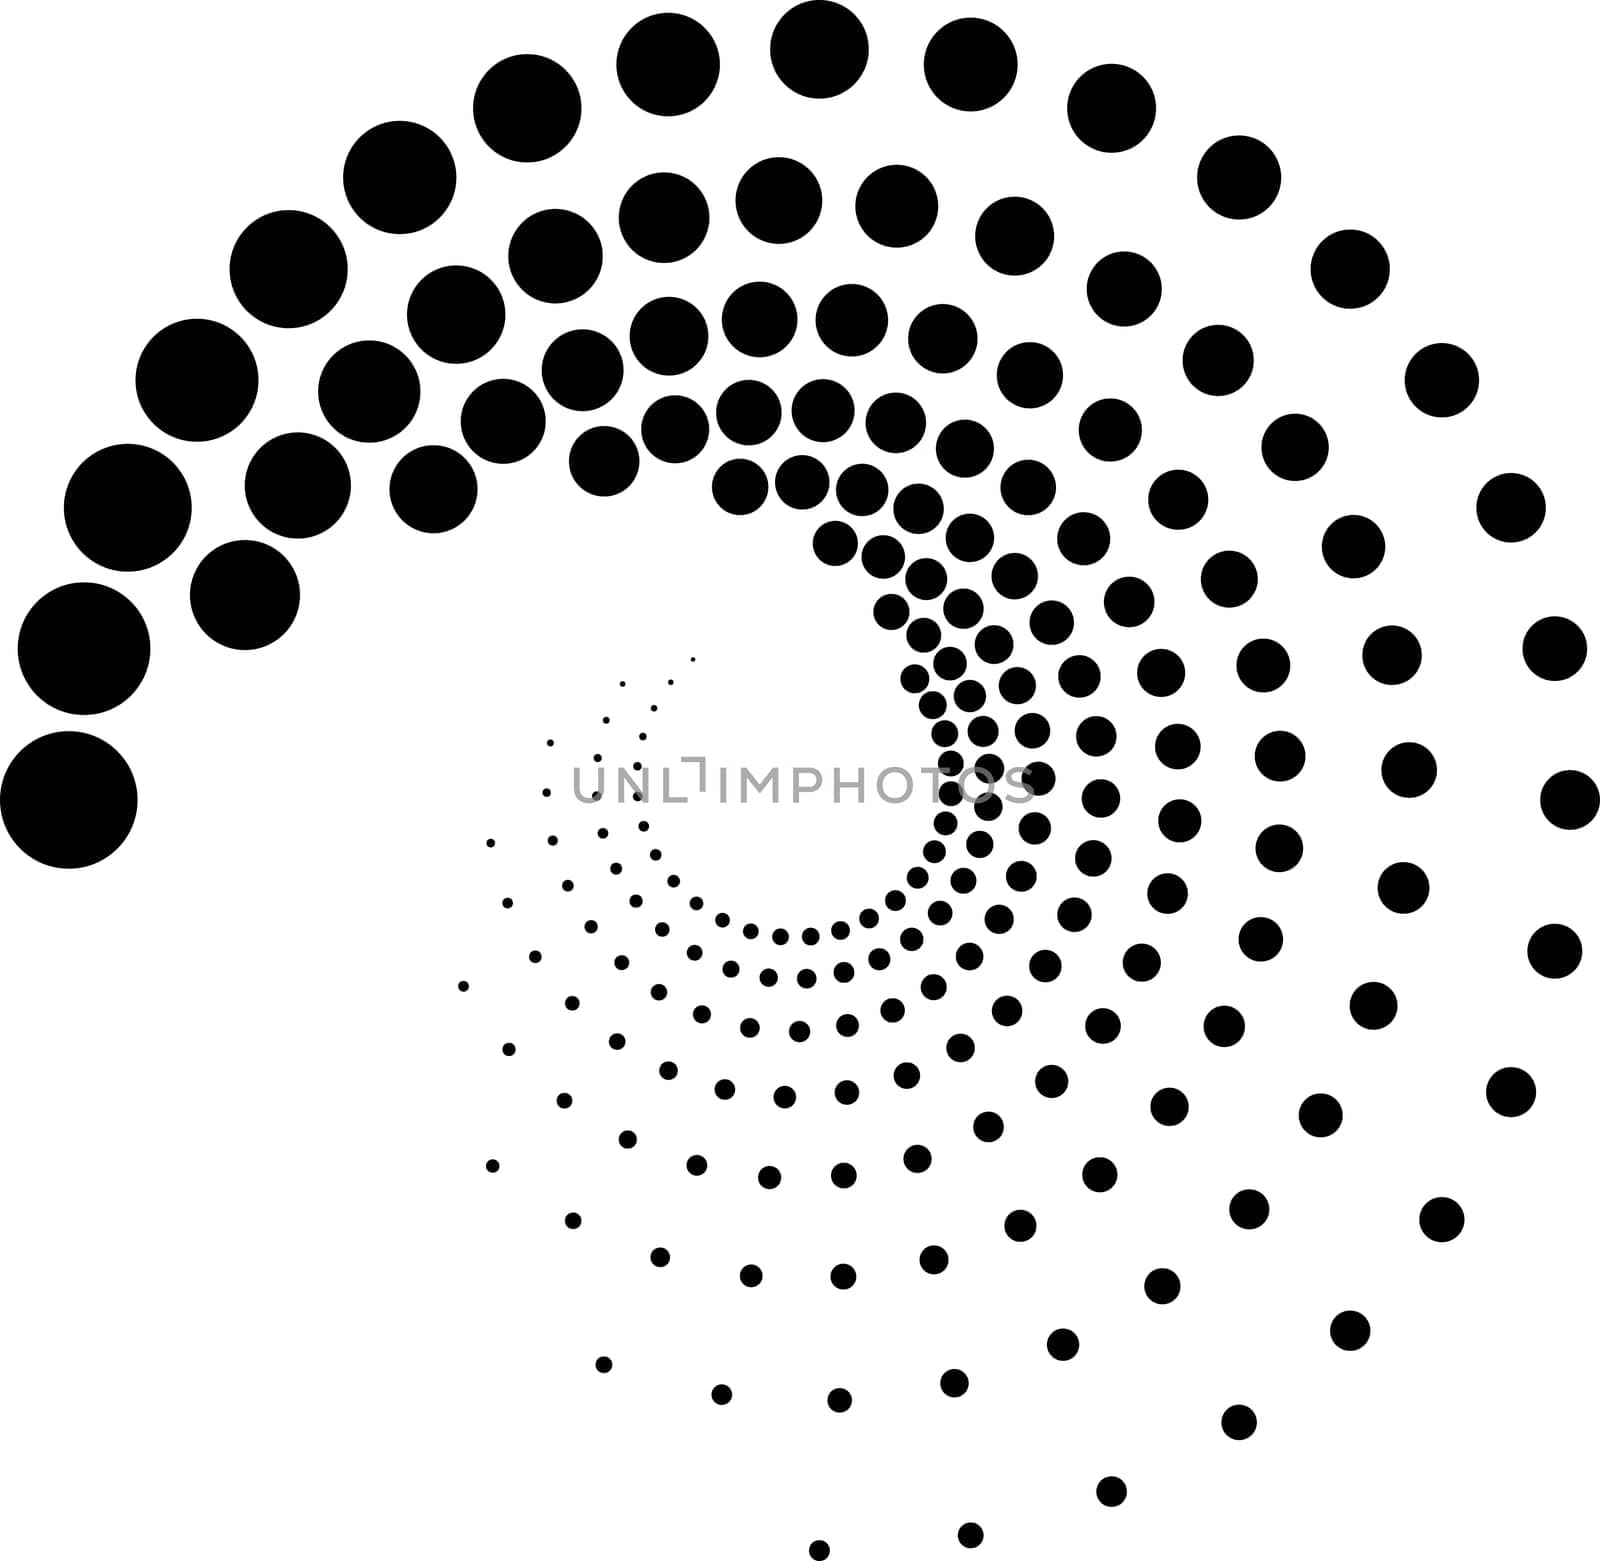 Decreasing point circle, shape spiral snail logo, spiral drops circle by koksikoks